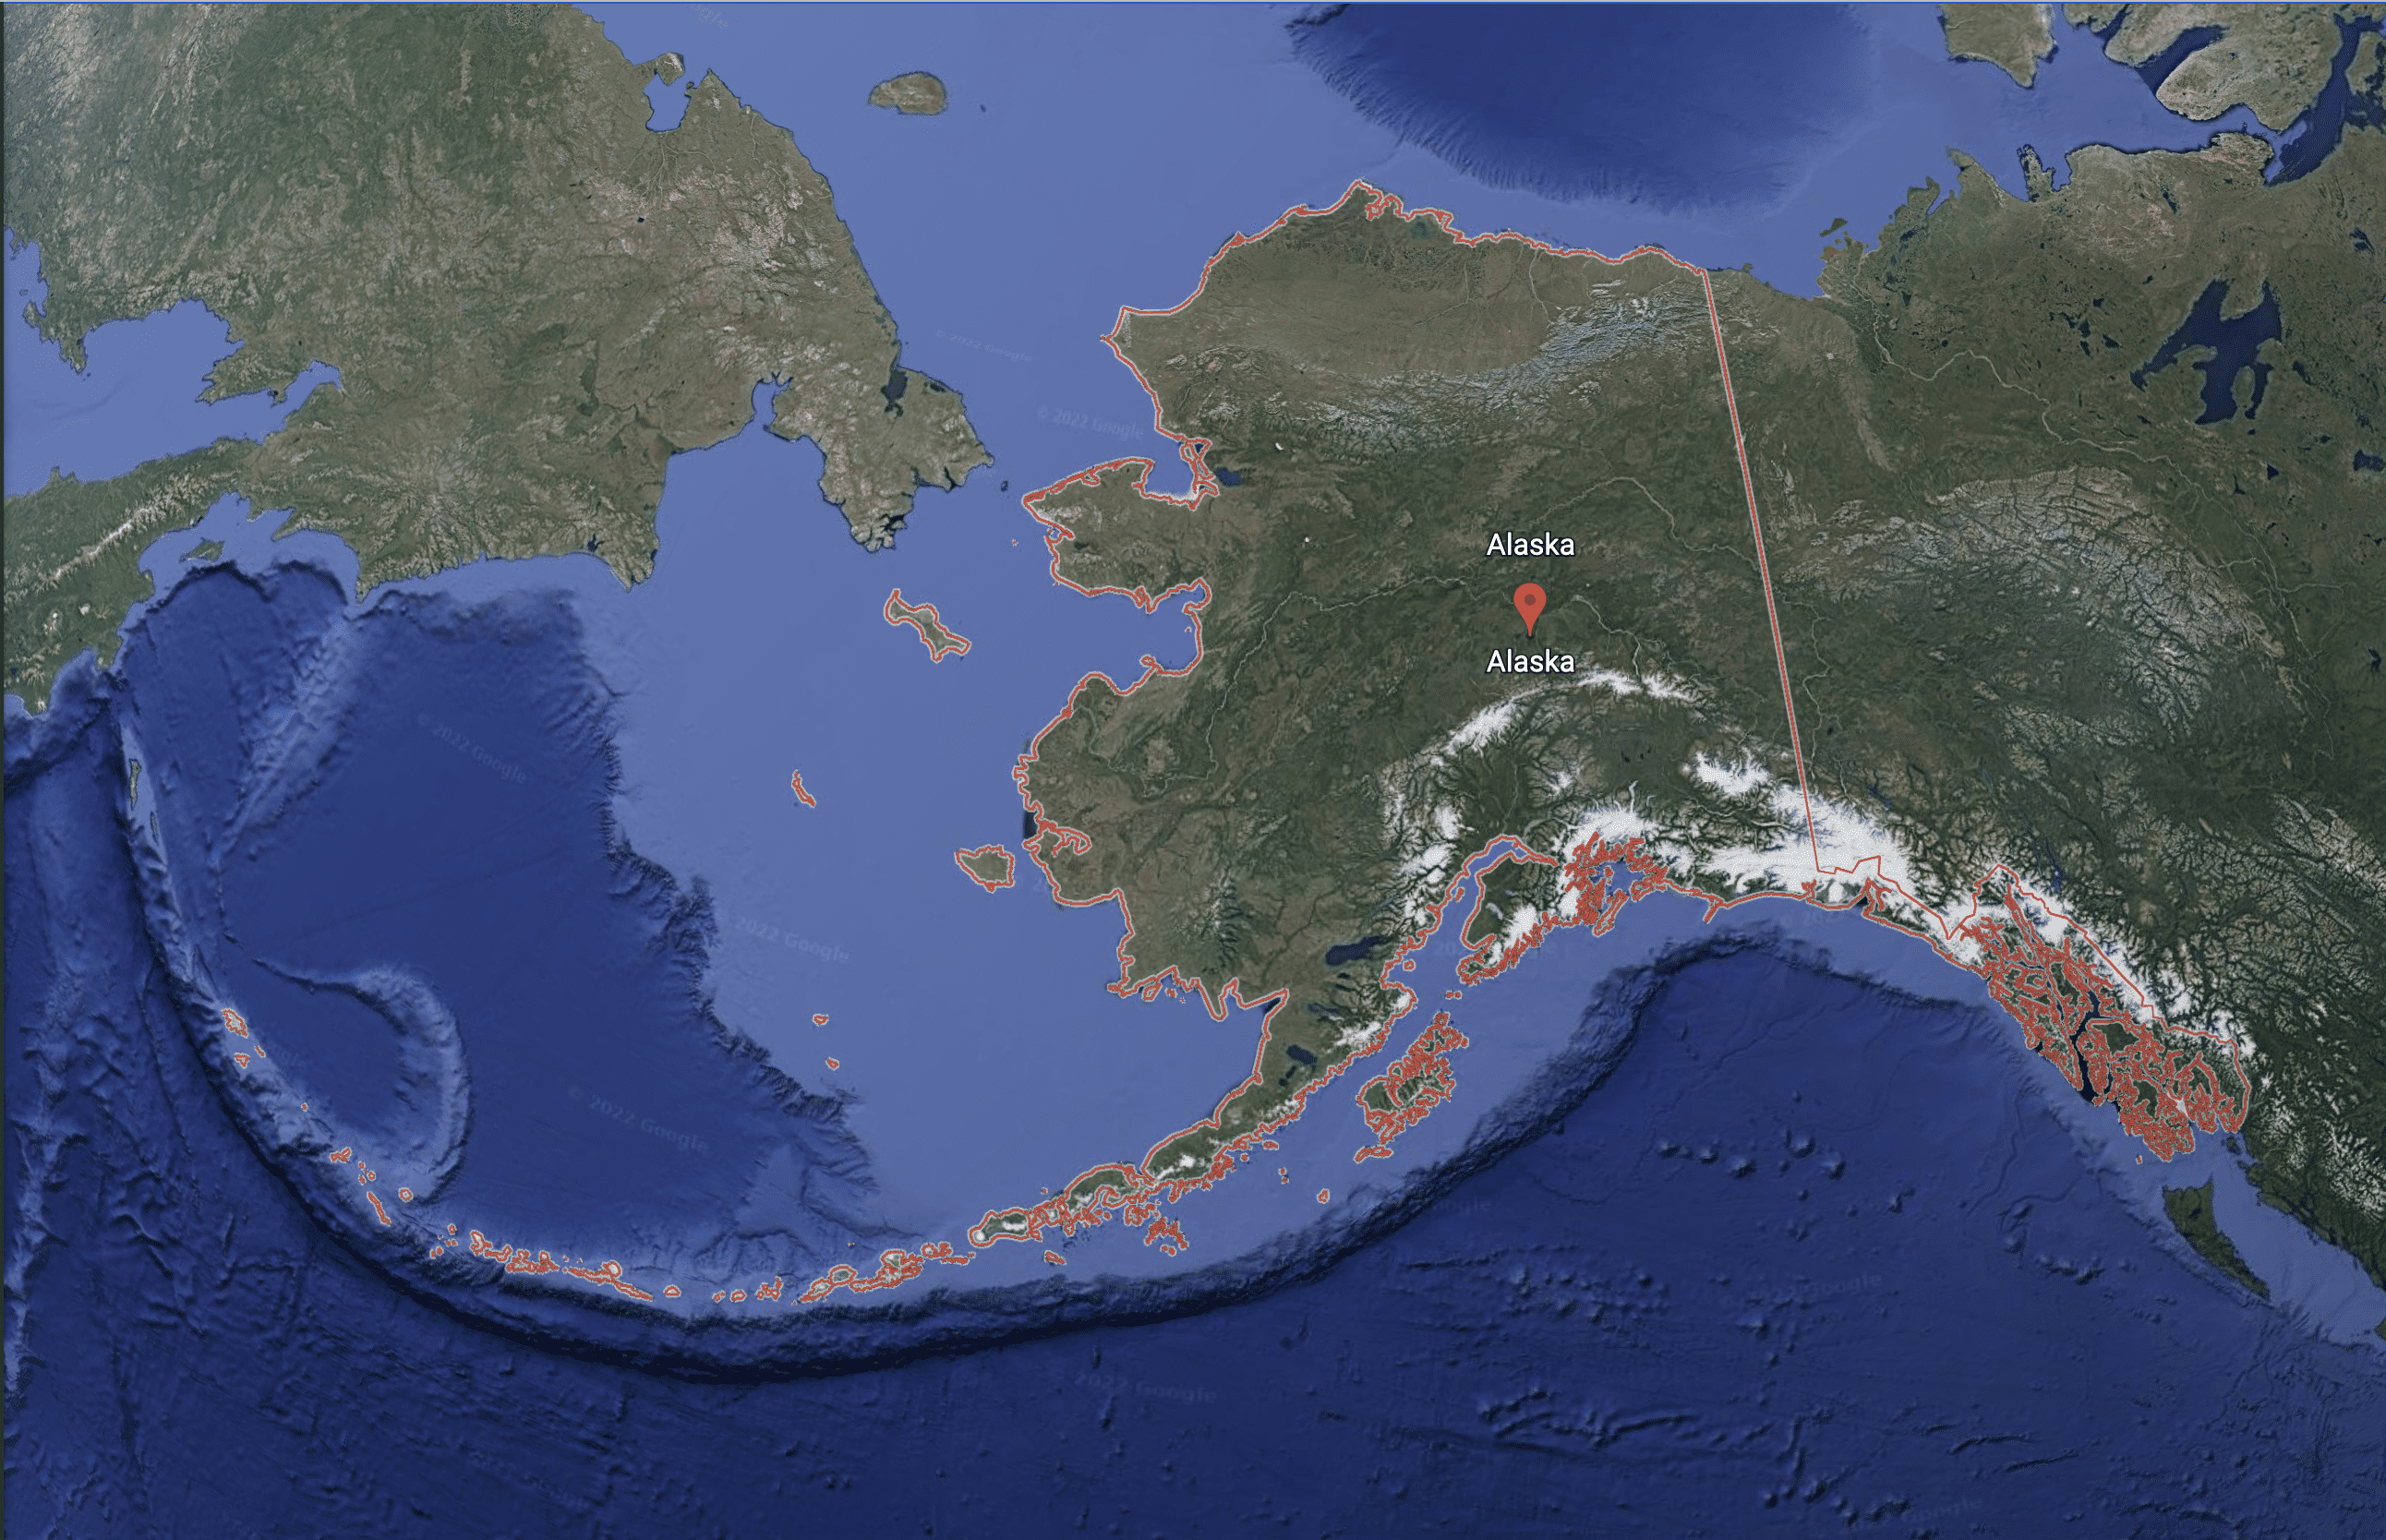 Satellite overhead image of Alaska from Google Earth 2022